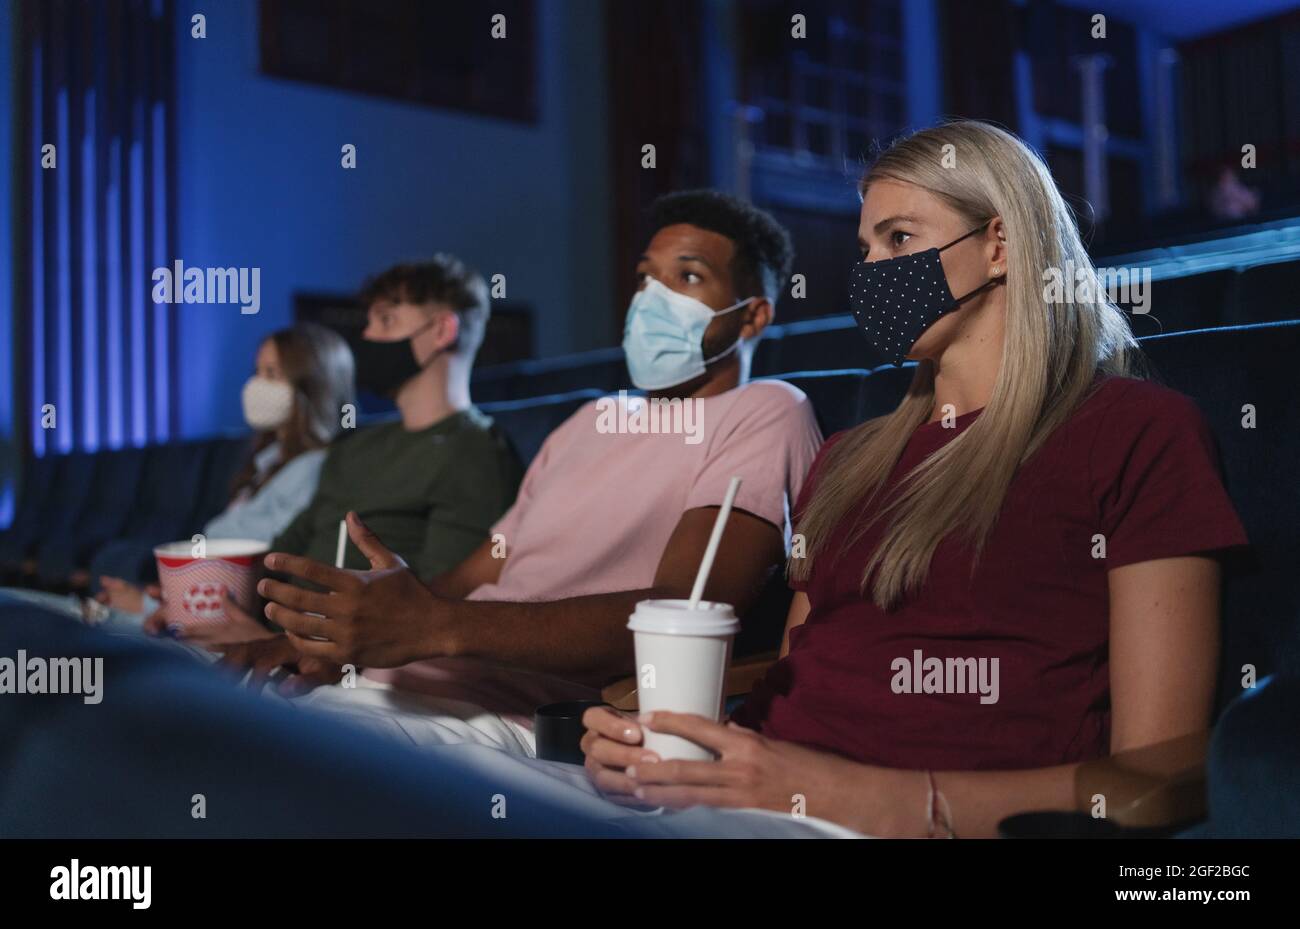 Young people watching film in the cinema, coronavirus concept. Stock Photo